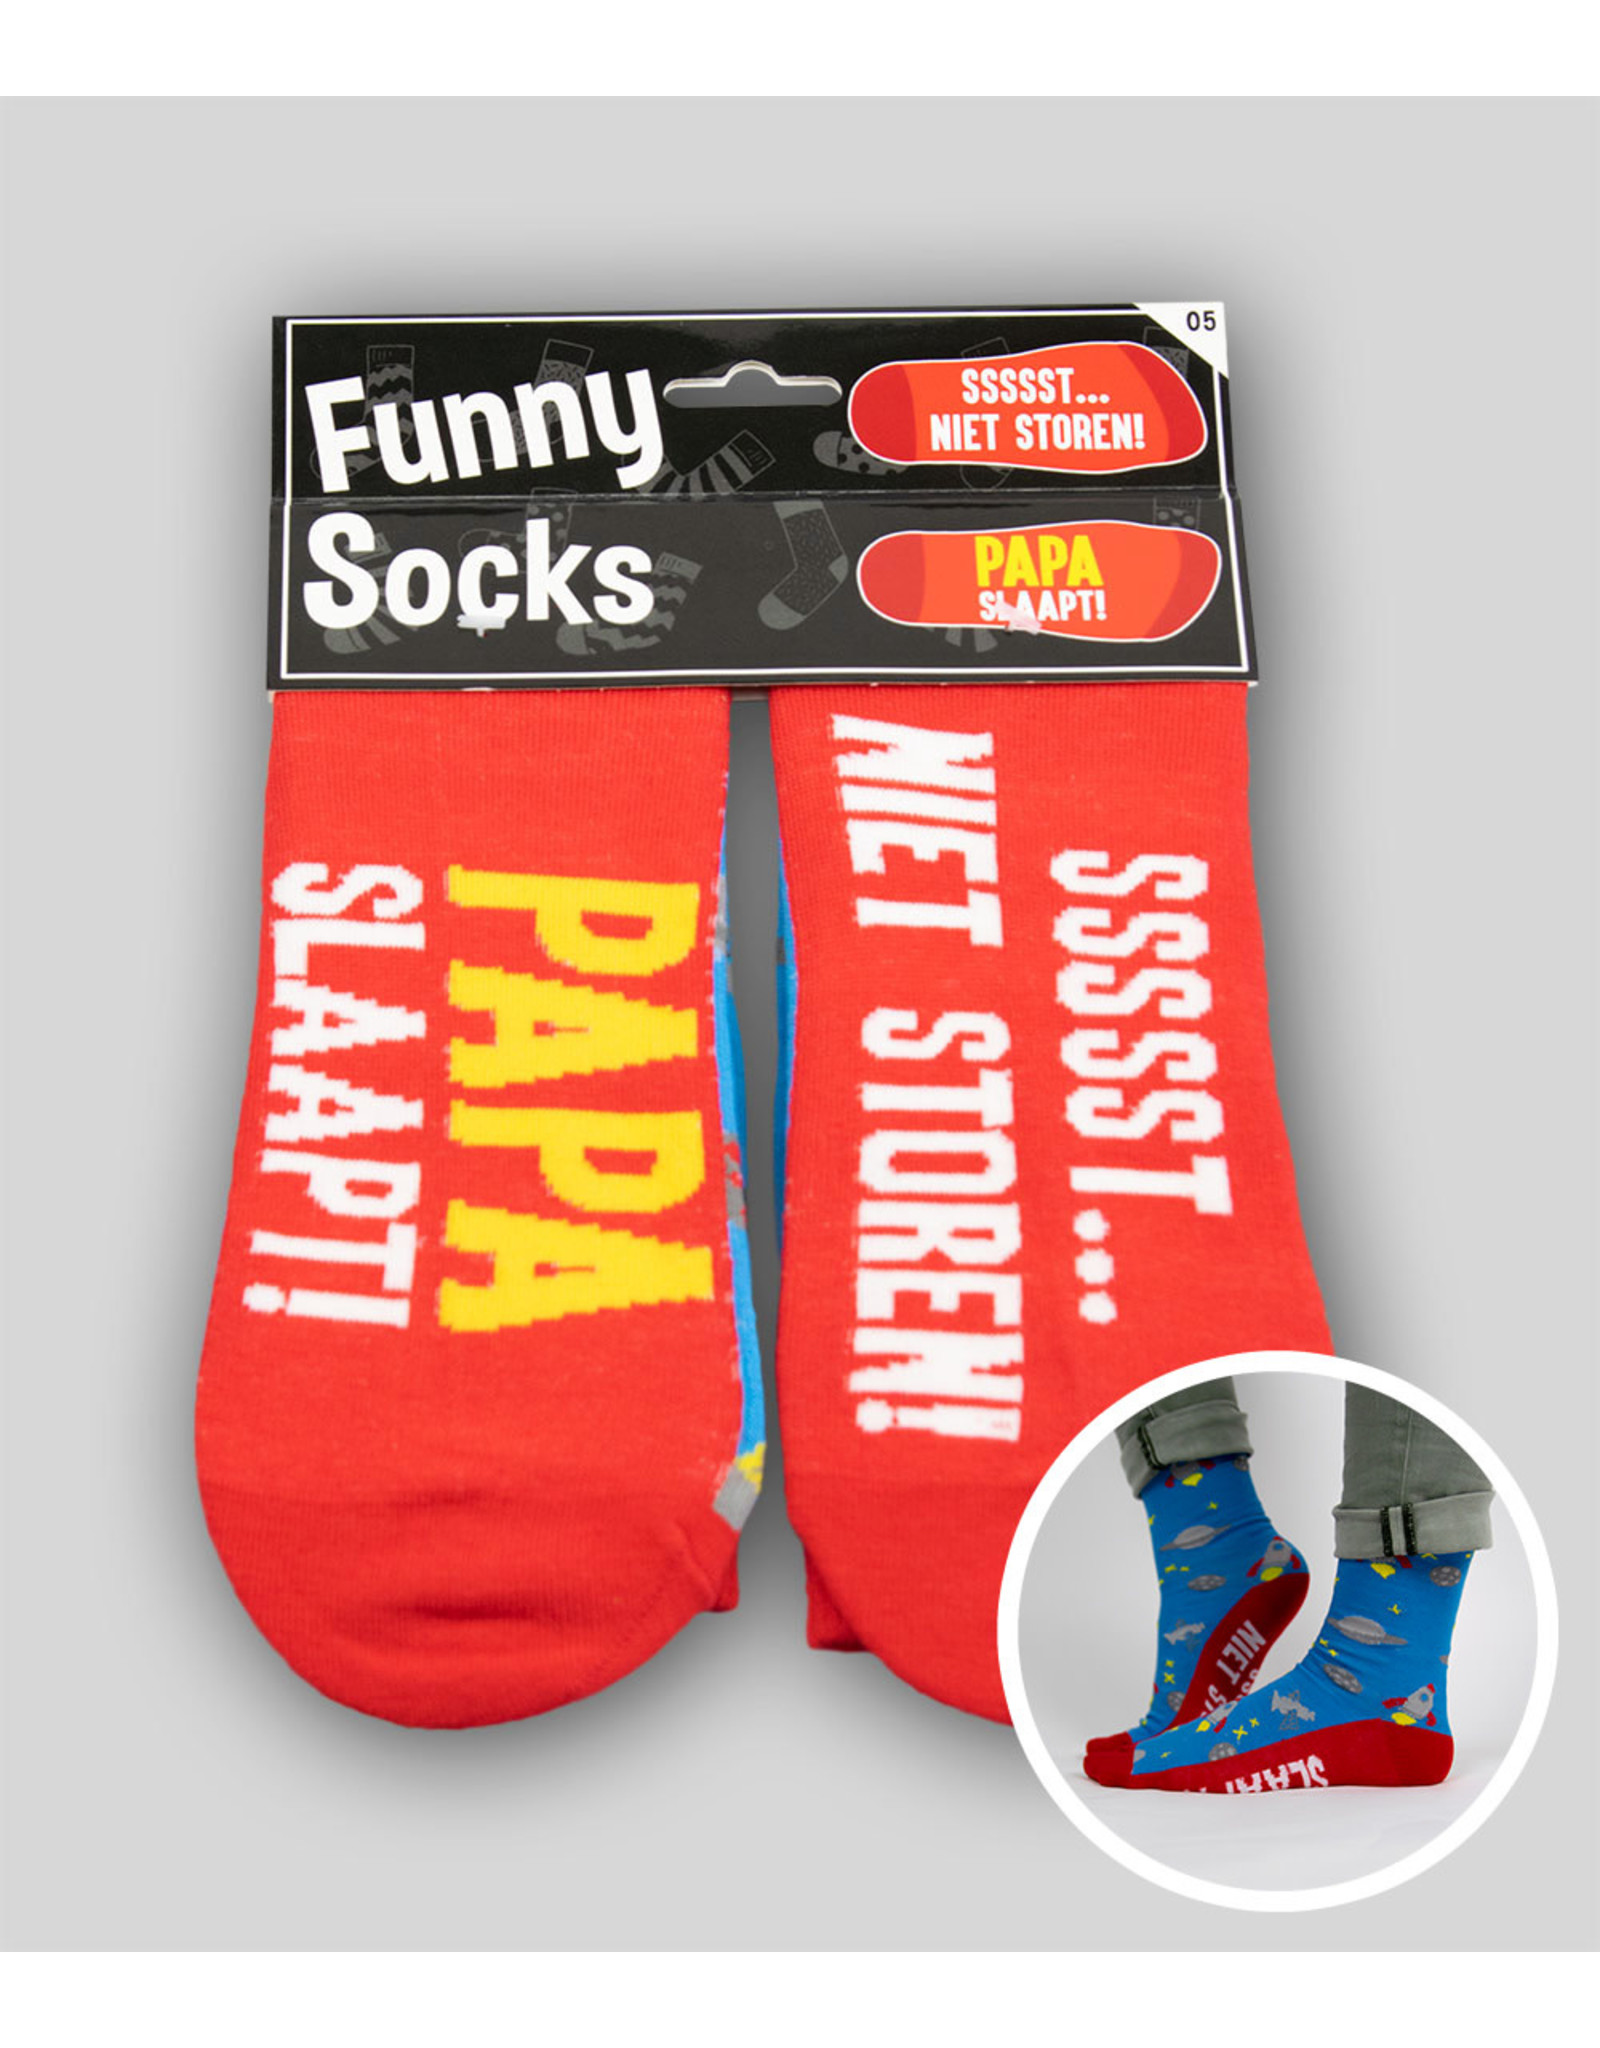 Funny Socks - Papa slaapt sssst